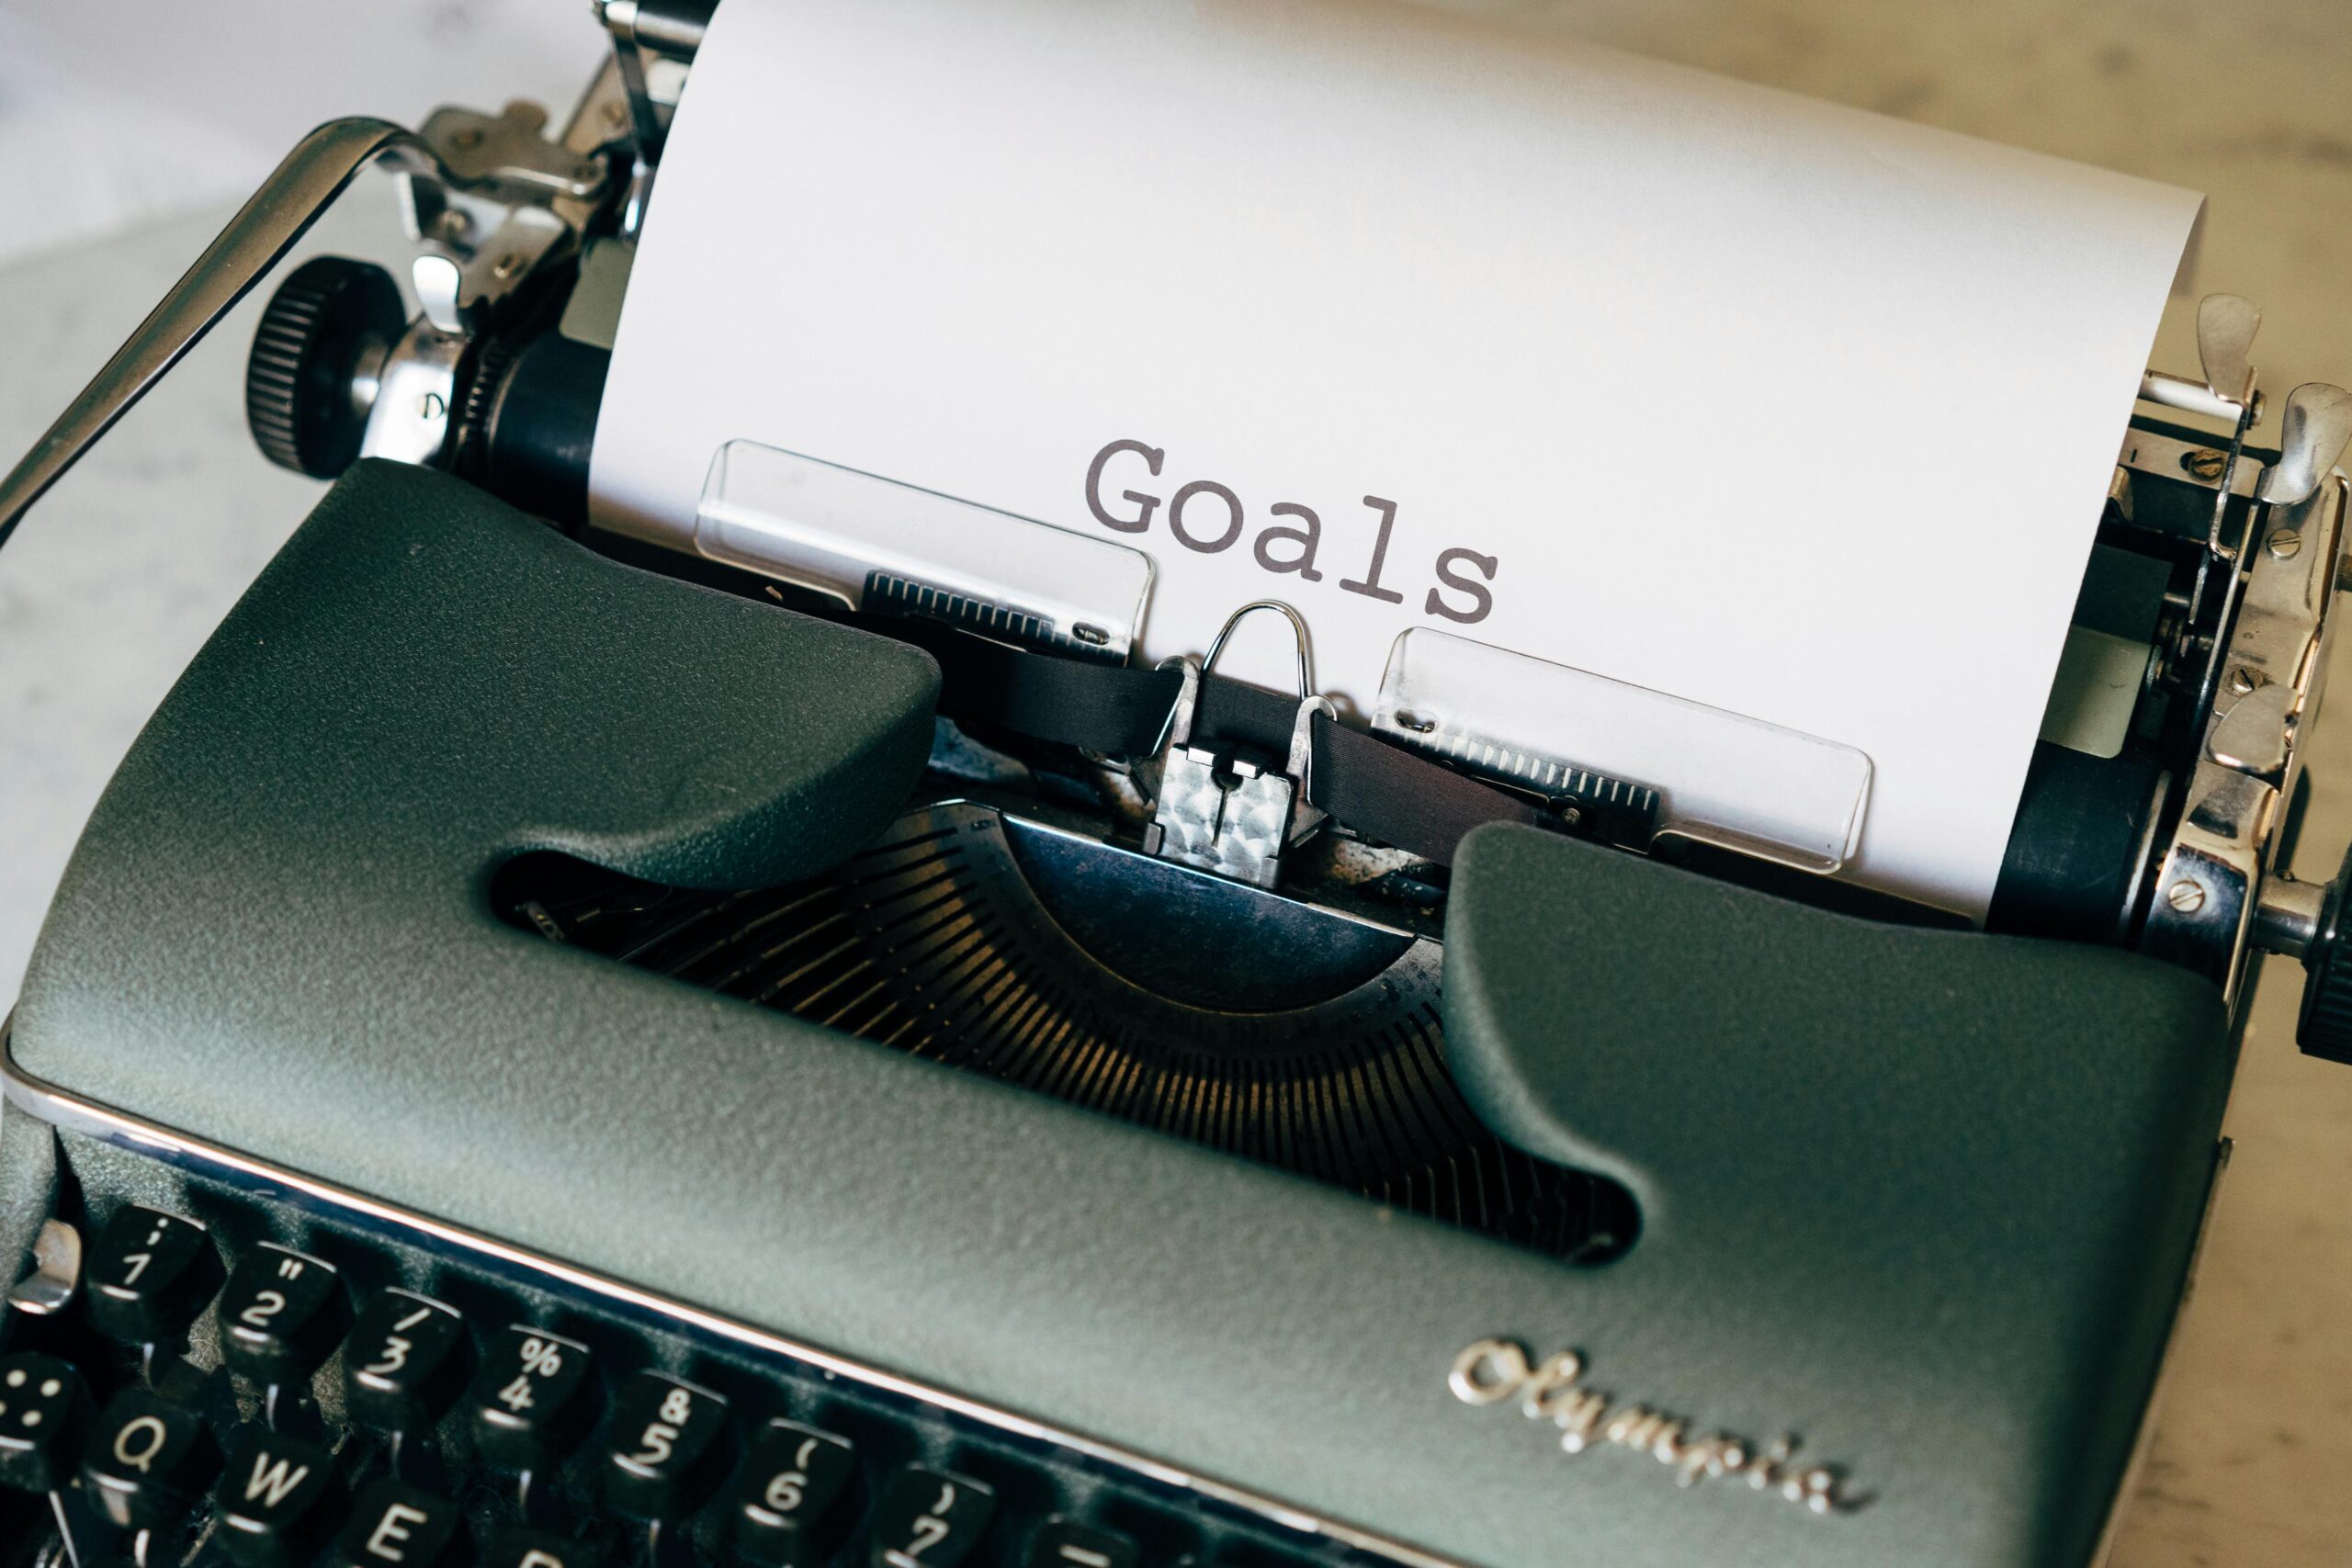 Typewriter with "goals" written on paper